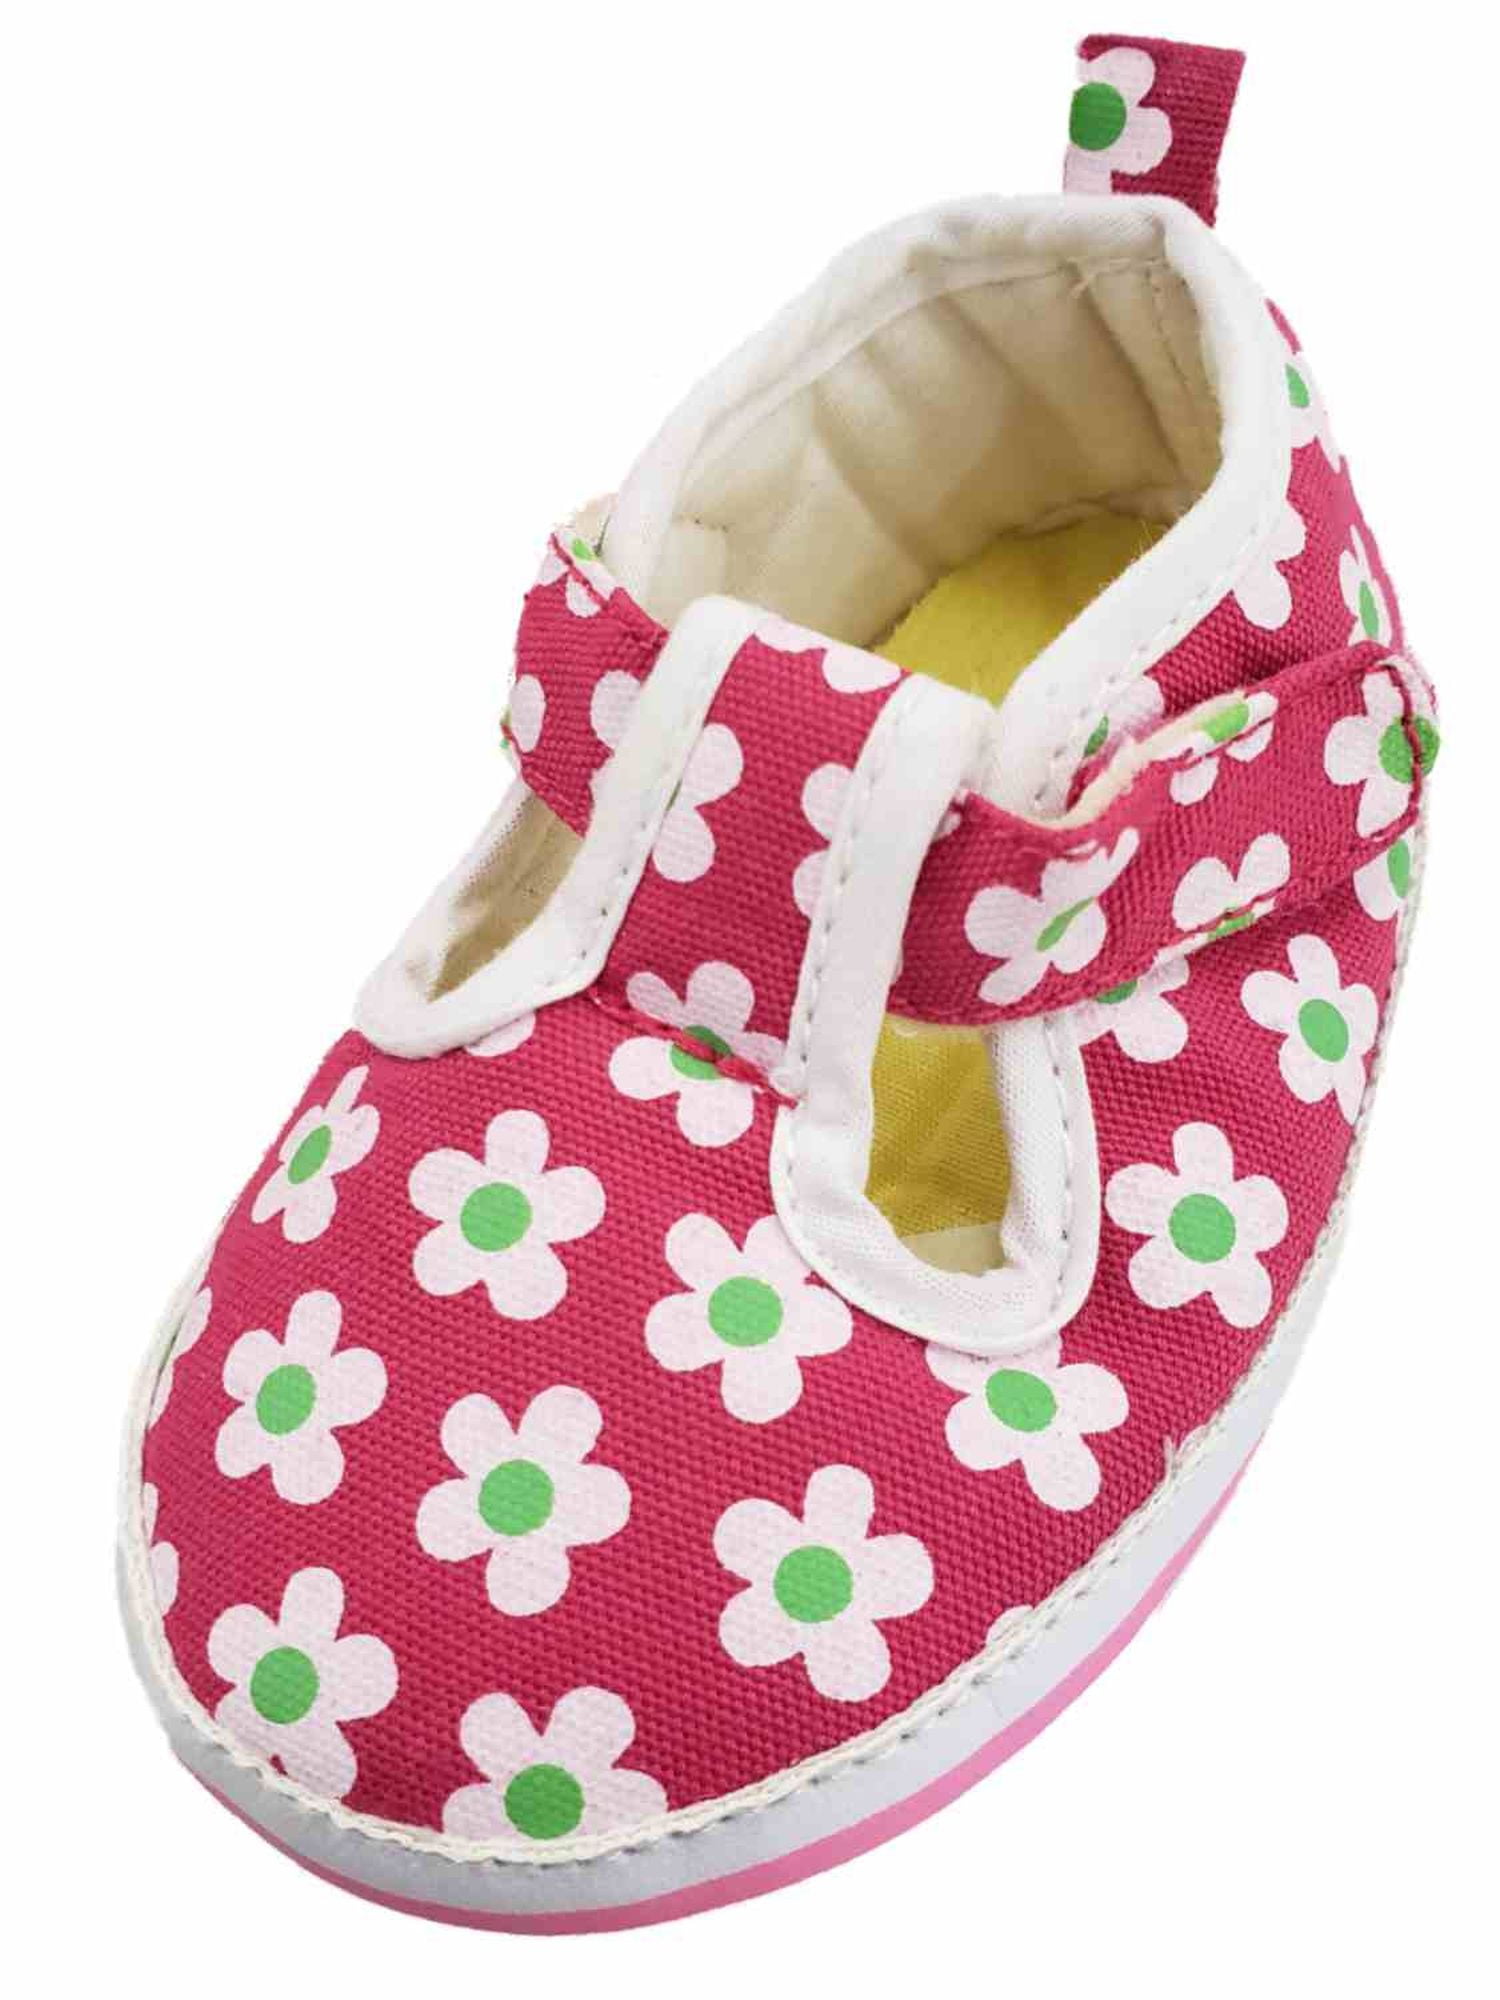 Goldbug - Infant Girls Hot Pink Flower Print Mary Jane Flats Baby Shoes ...